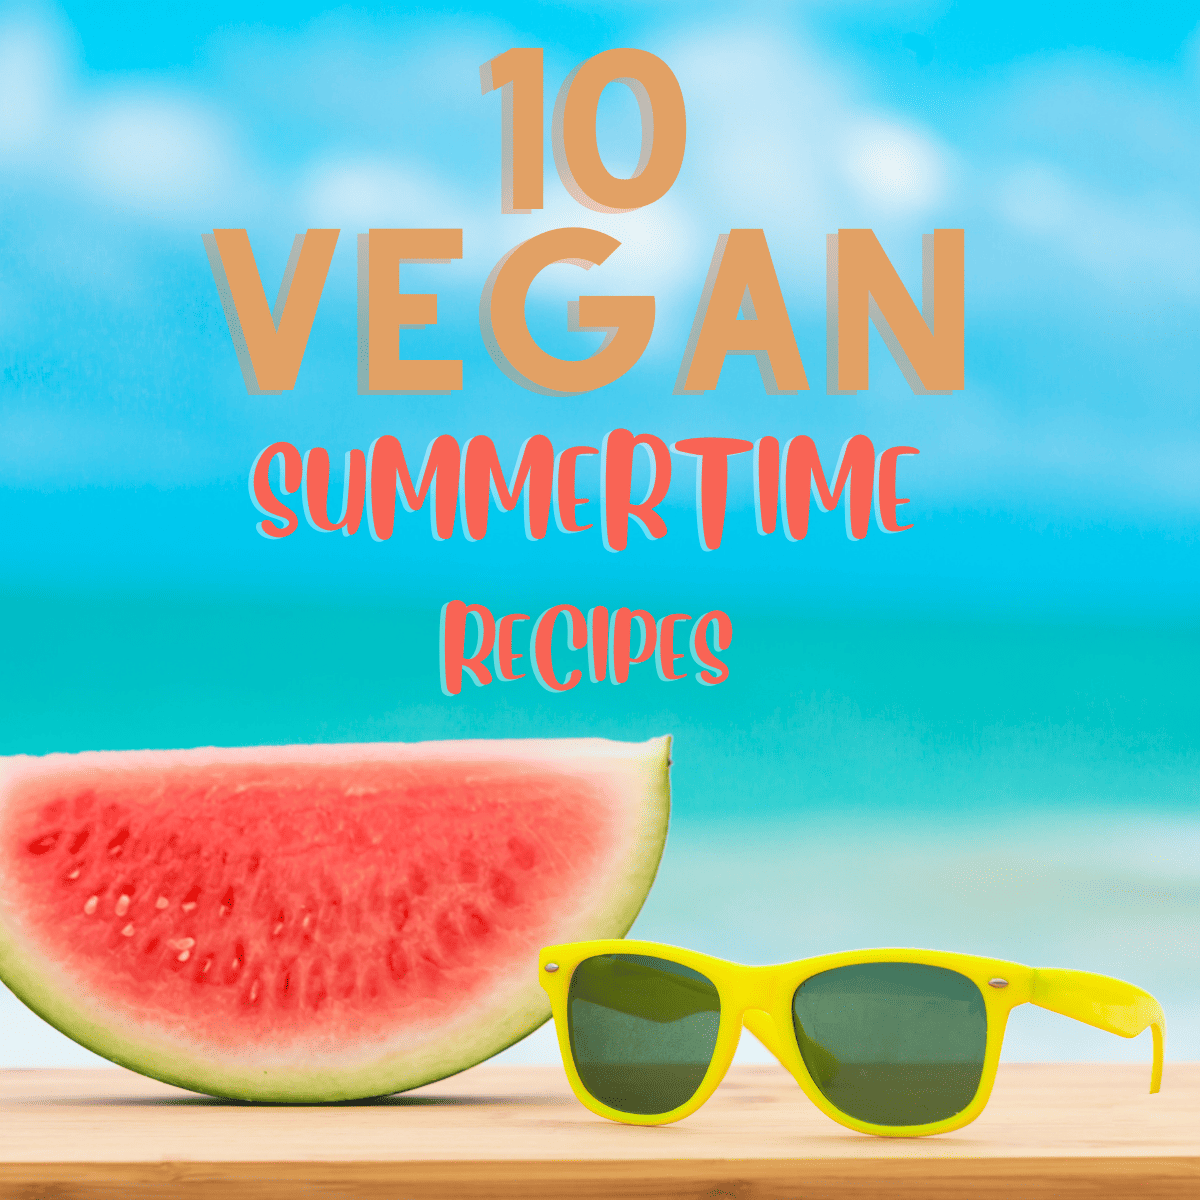 10 vegan summertime recipes